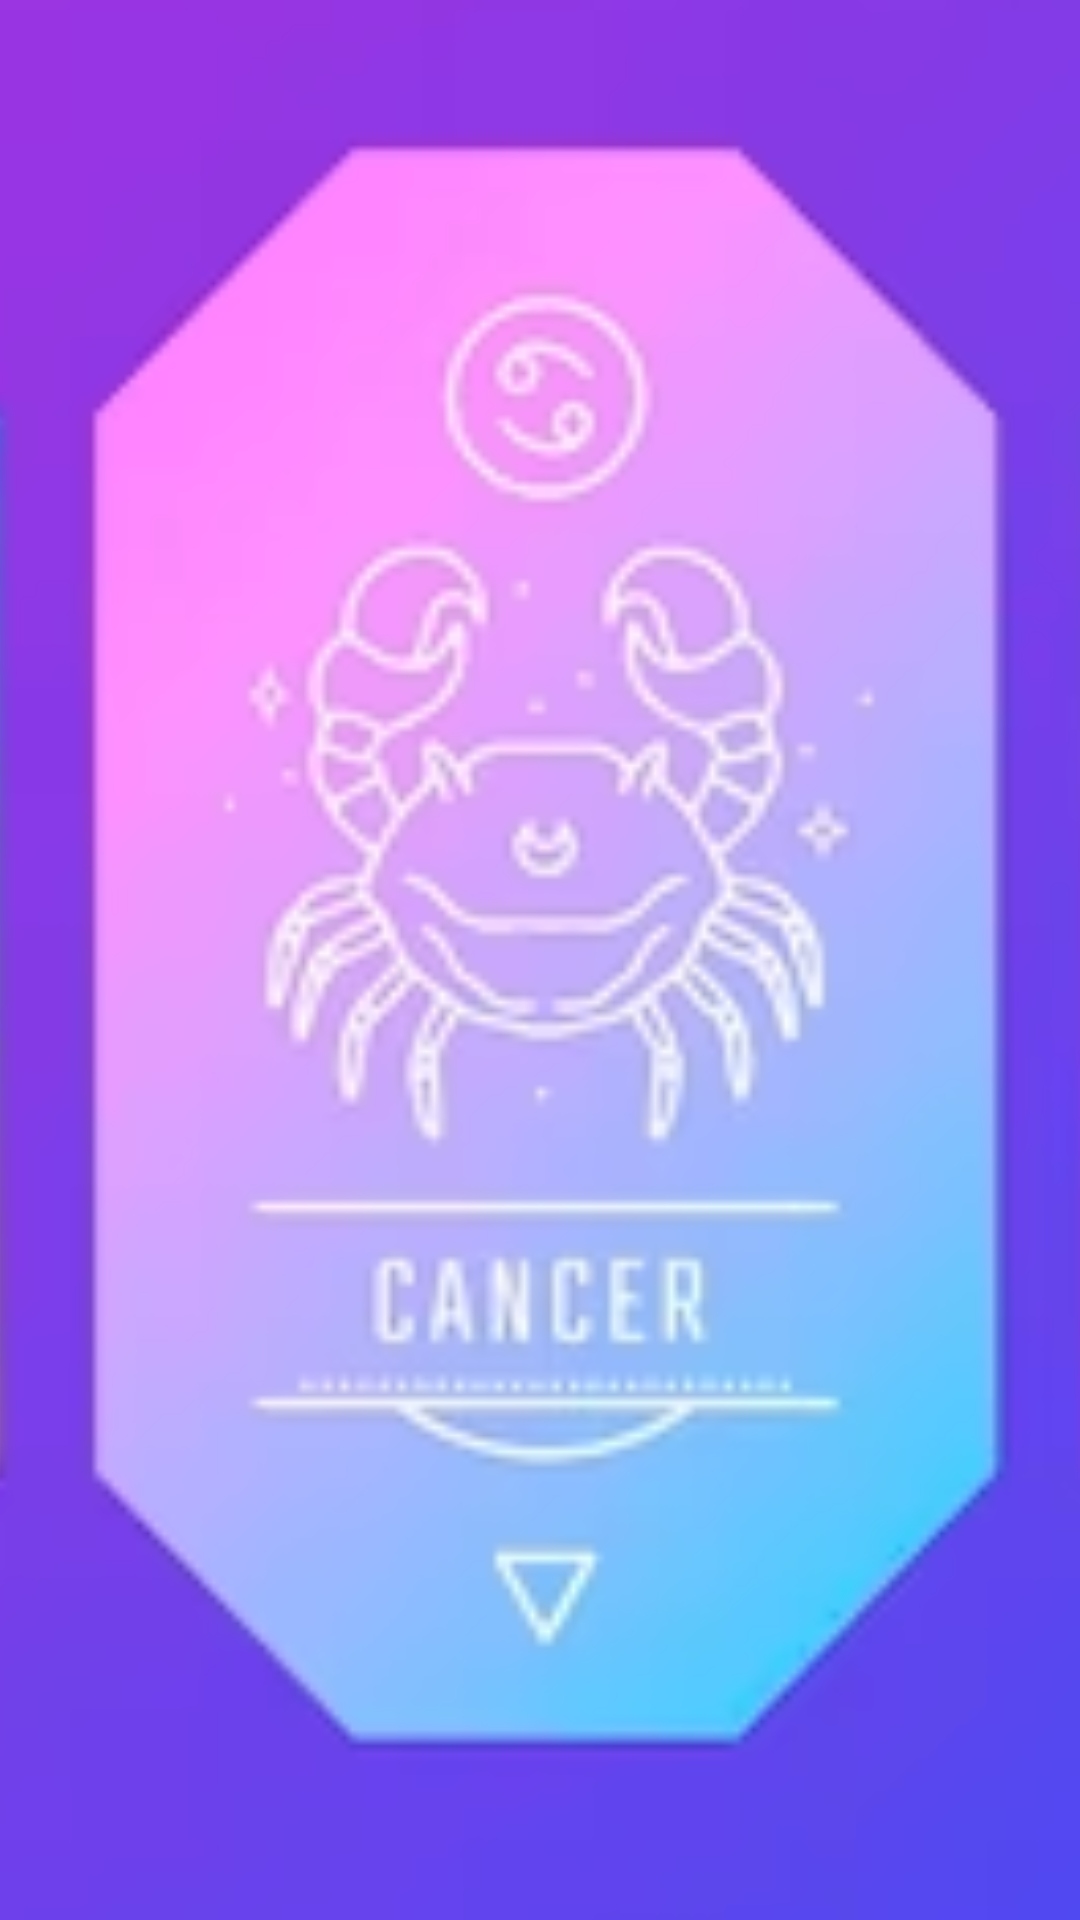 Download wallpapers Cancer zodiac sign 3d zodiac signs astrology Cancer  3d astrological sign purple background creative 3d art for desktop free  Pictures for desktop free